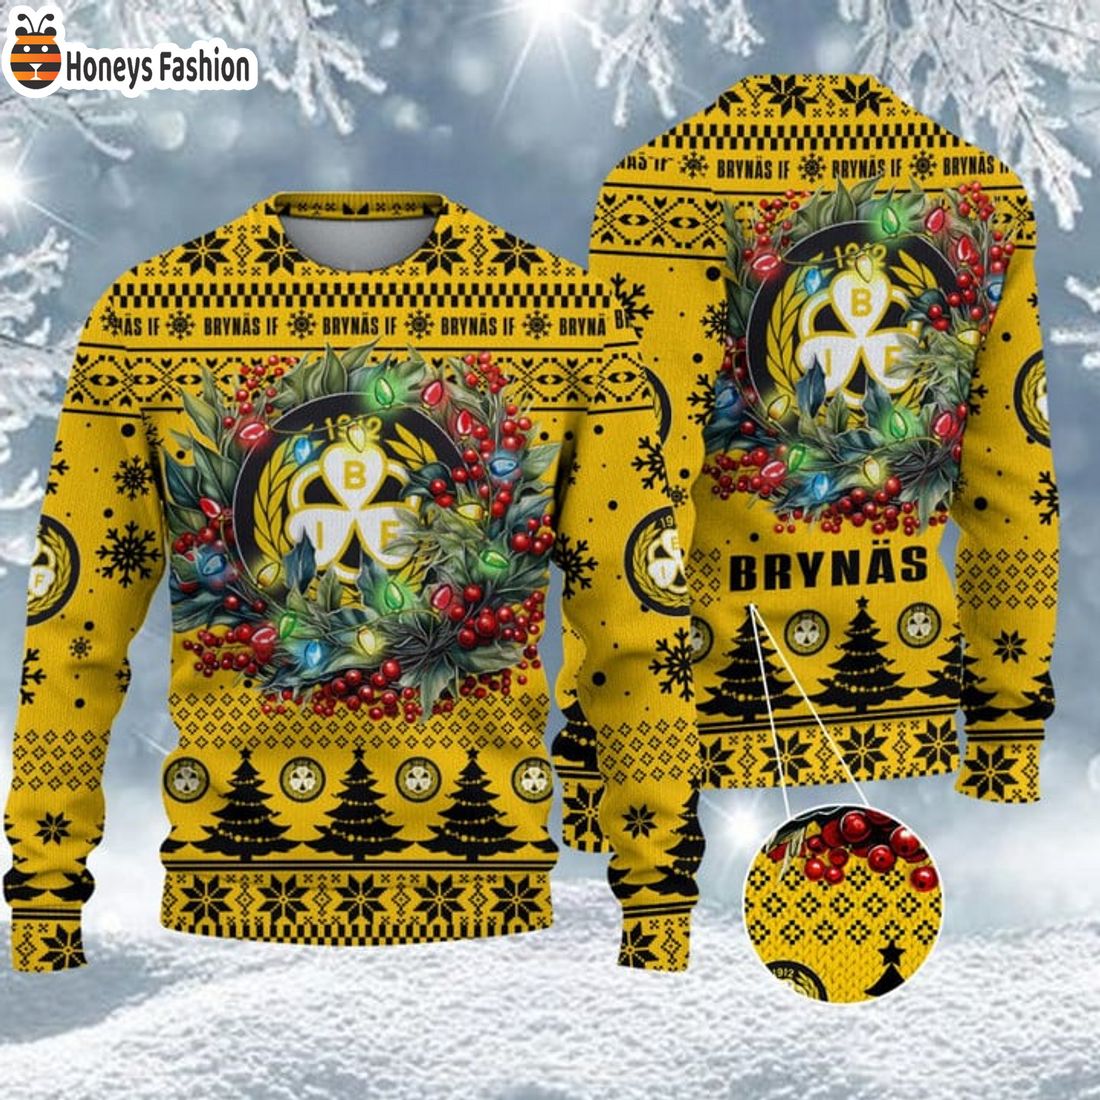 TRENDING Brynas IF SHL & HockeyAllsvenskan Ugly Christmas Sweater